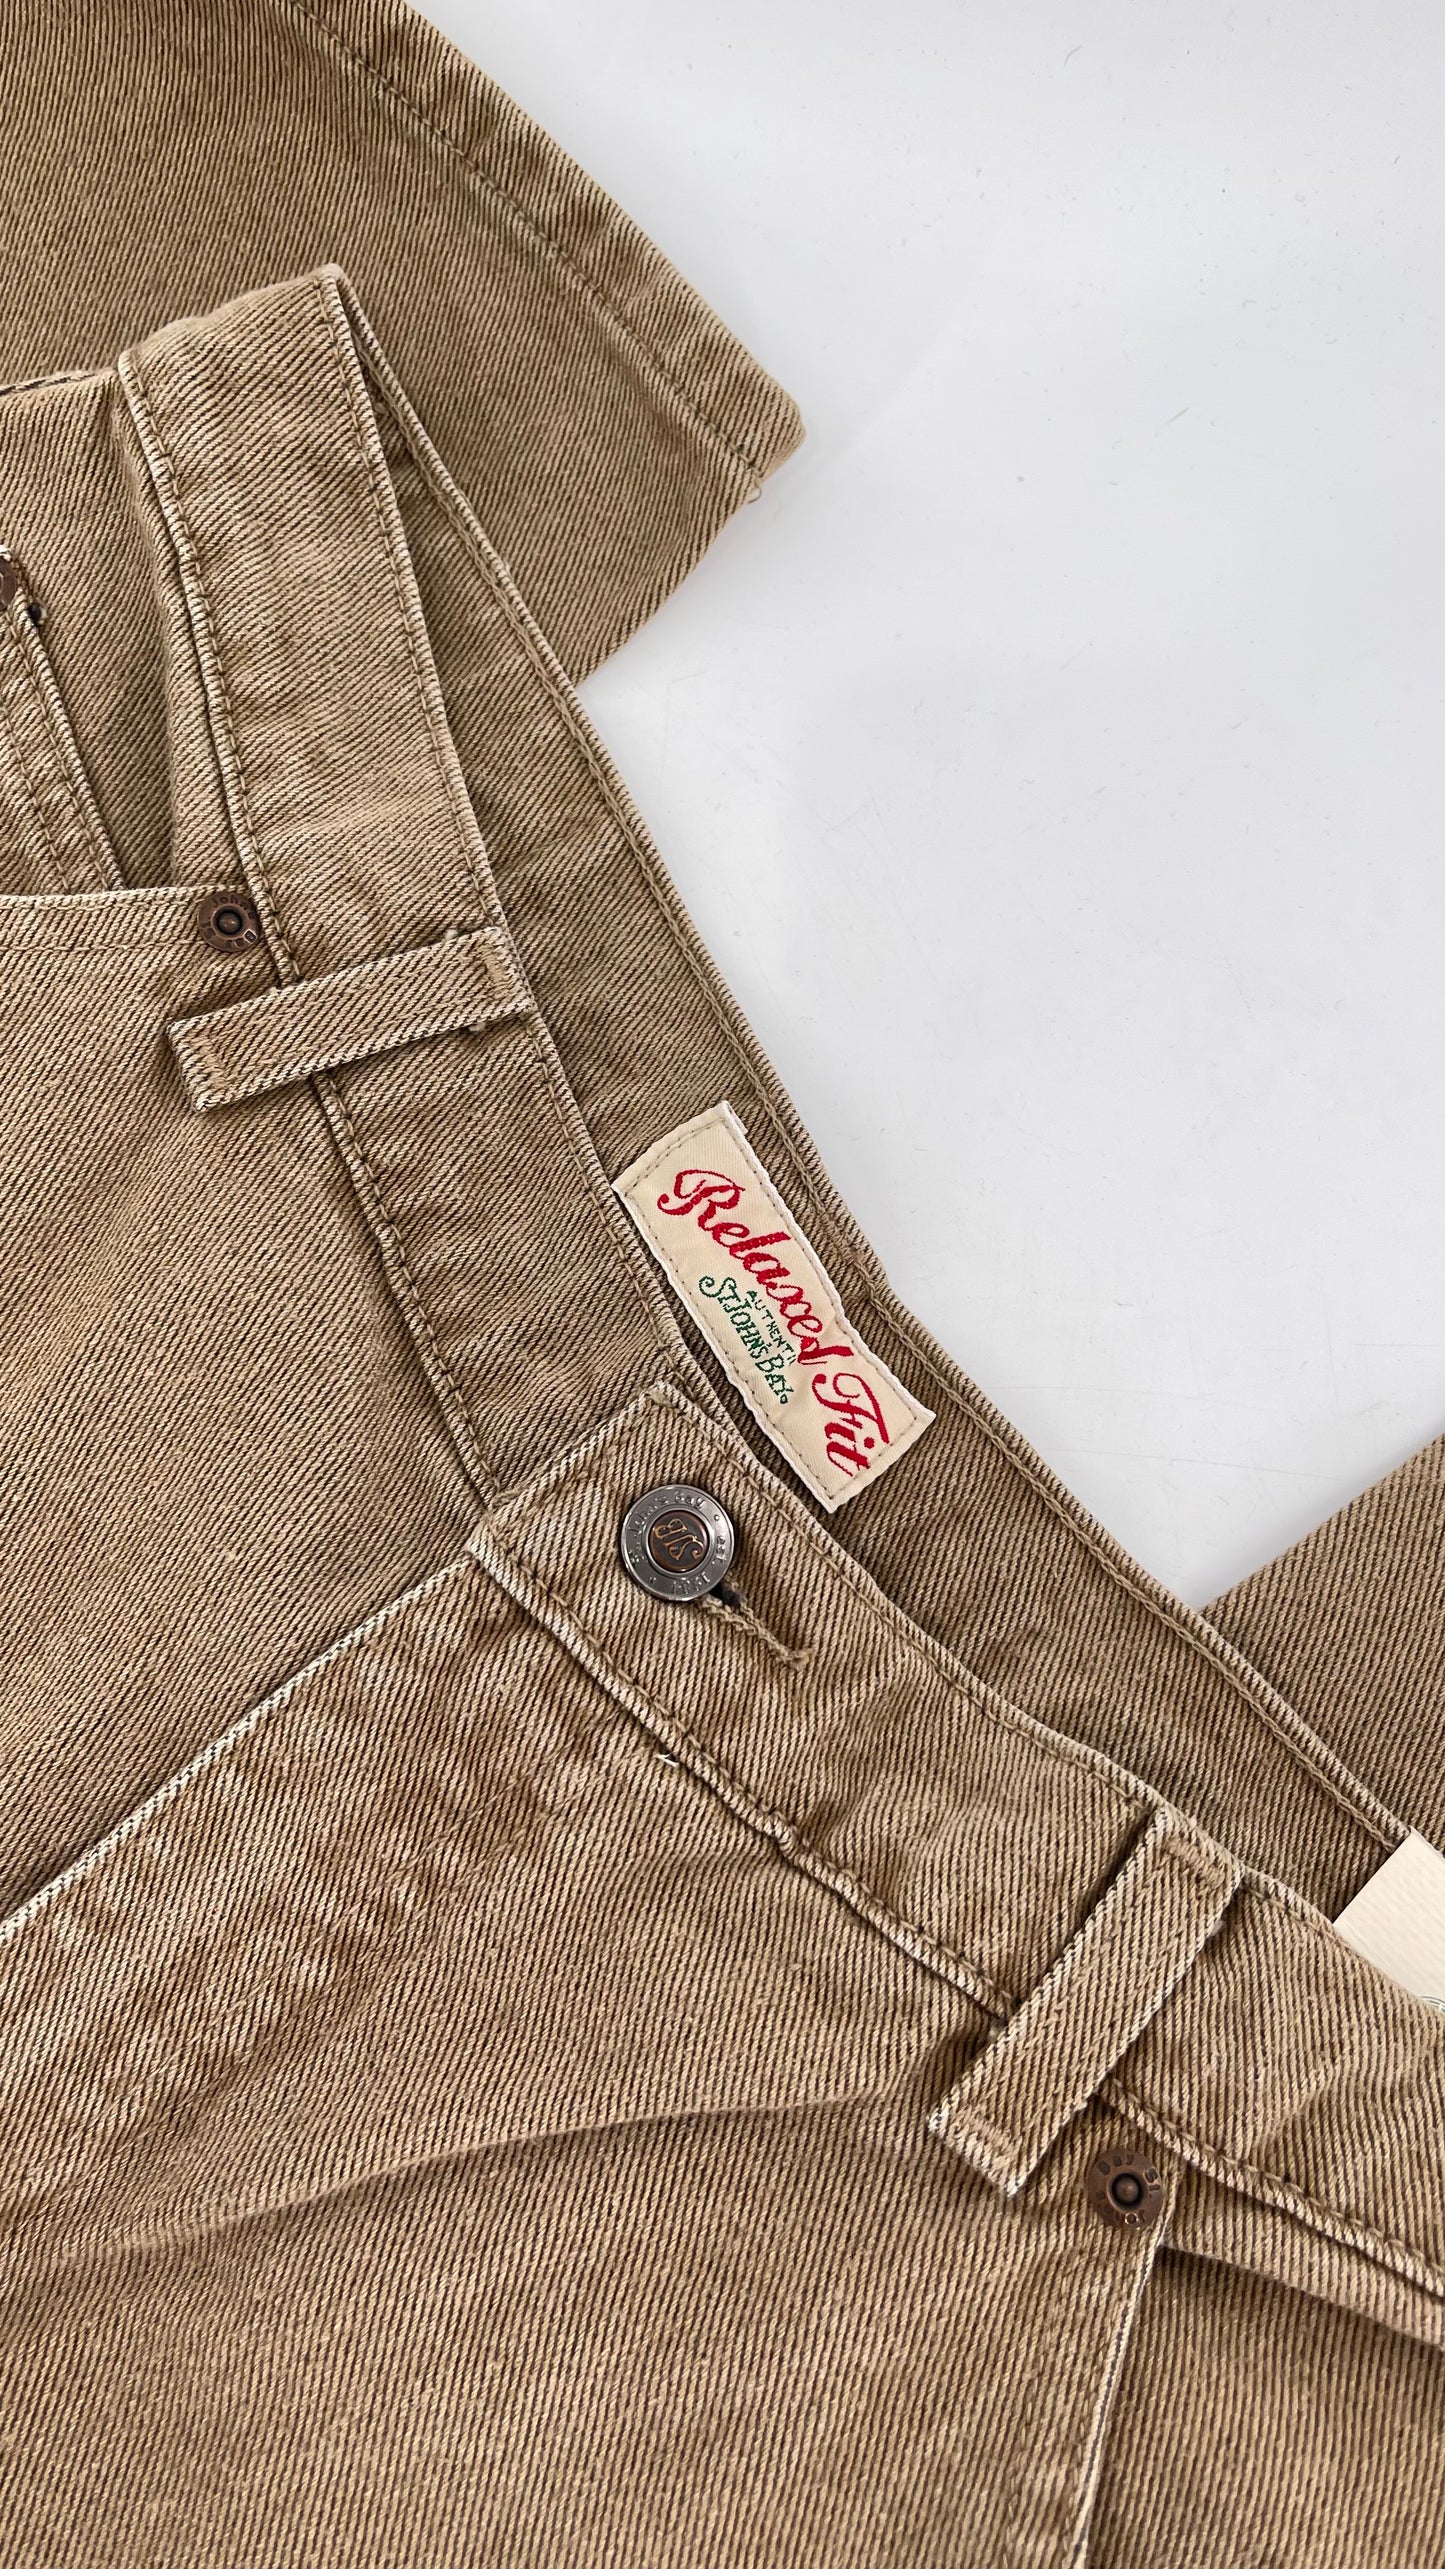 Saint Johns Bay Deadstock Vintage Jeans Brown (Size 16)